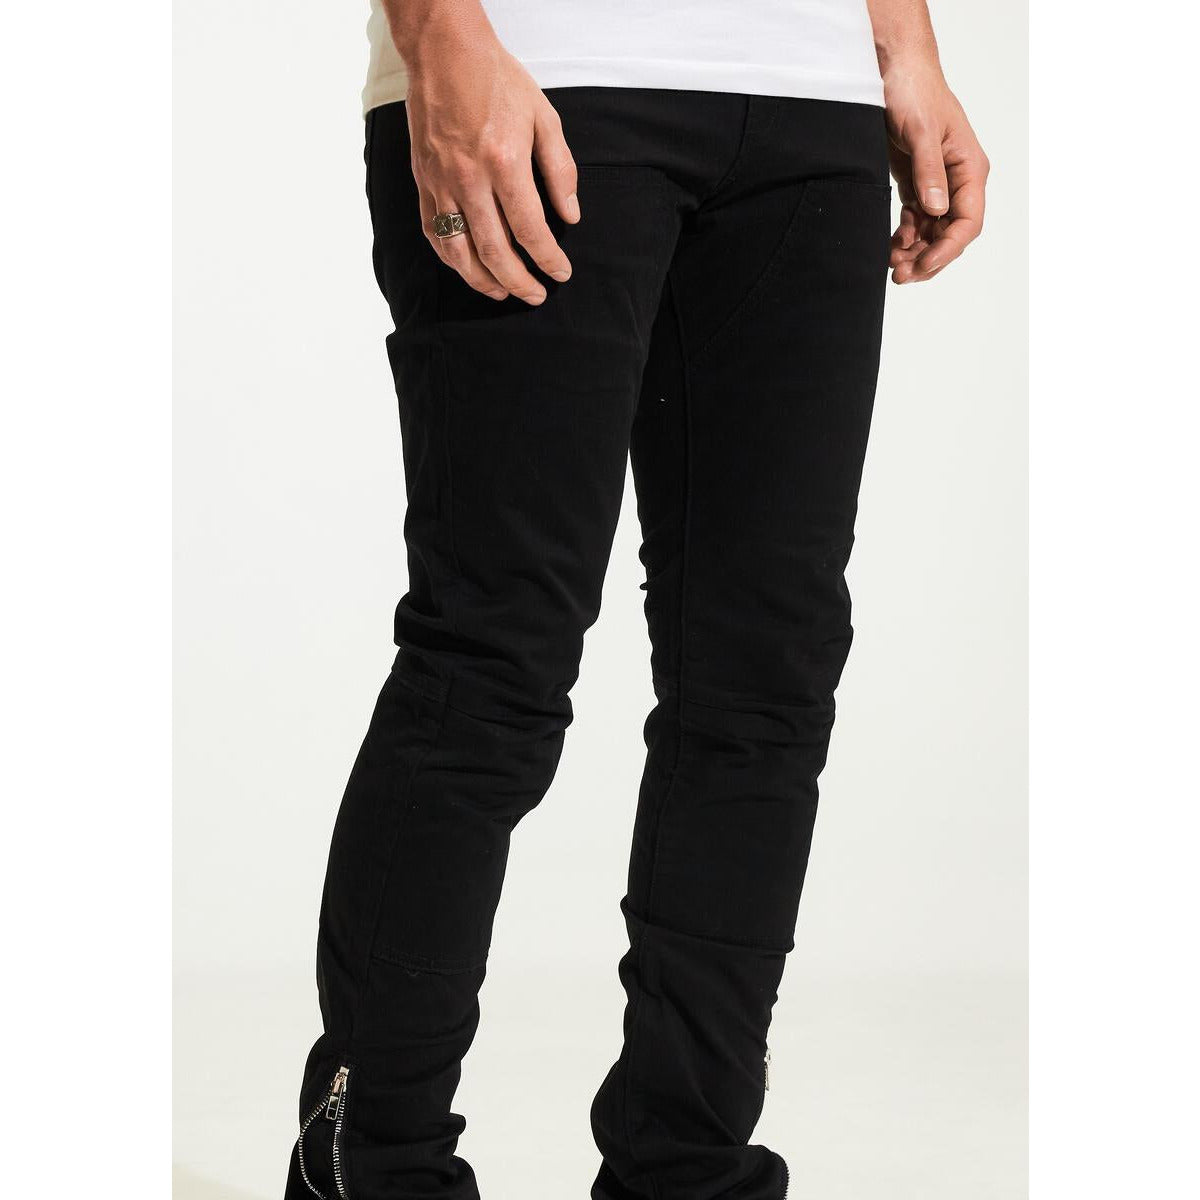 Crysp Denim Smith Pant Black Ripped Jeans (CRYH22-205)